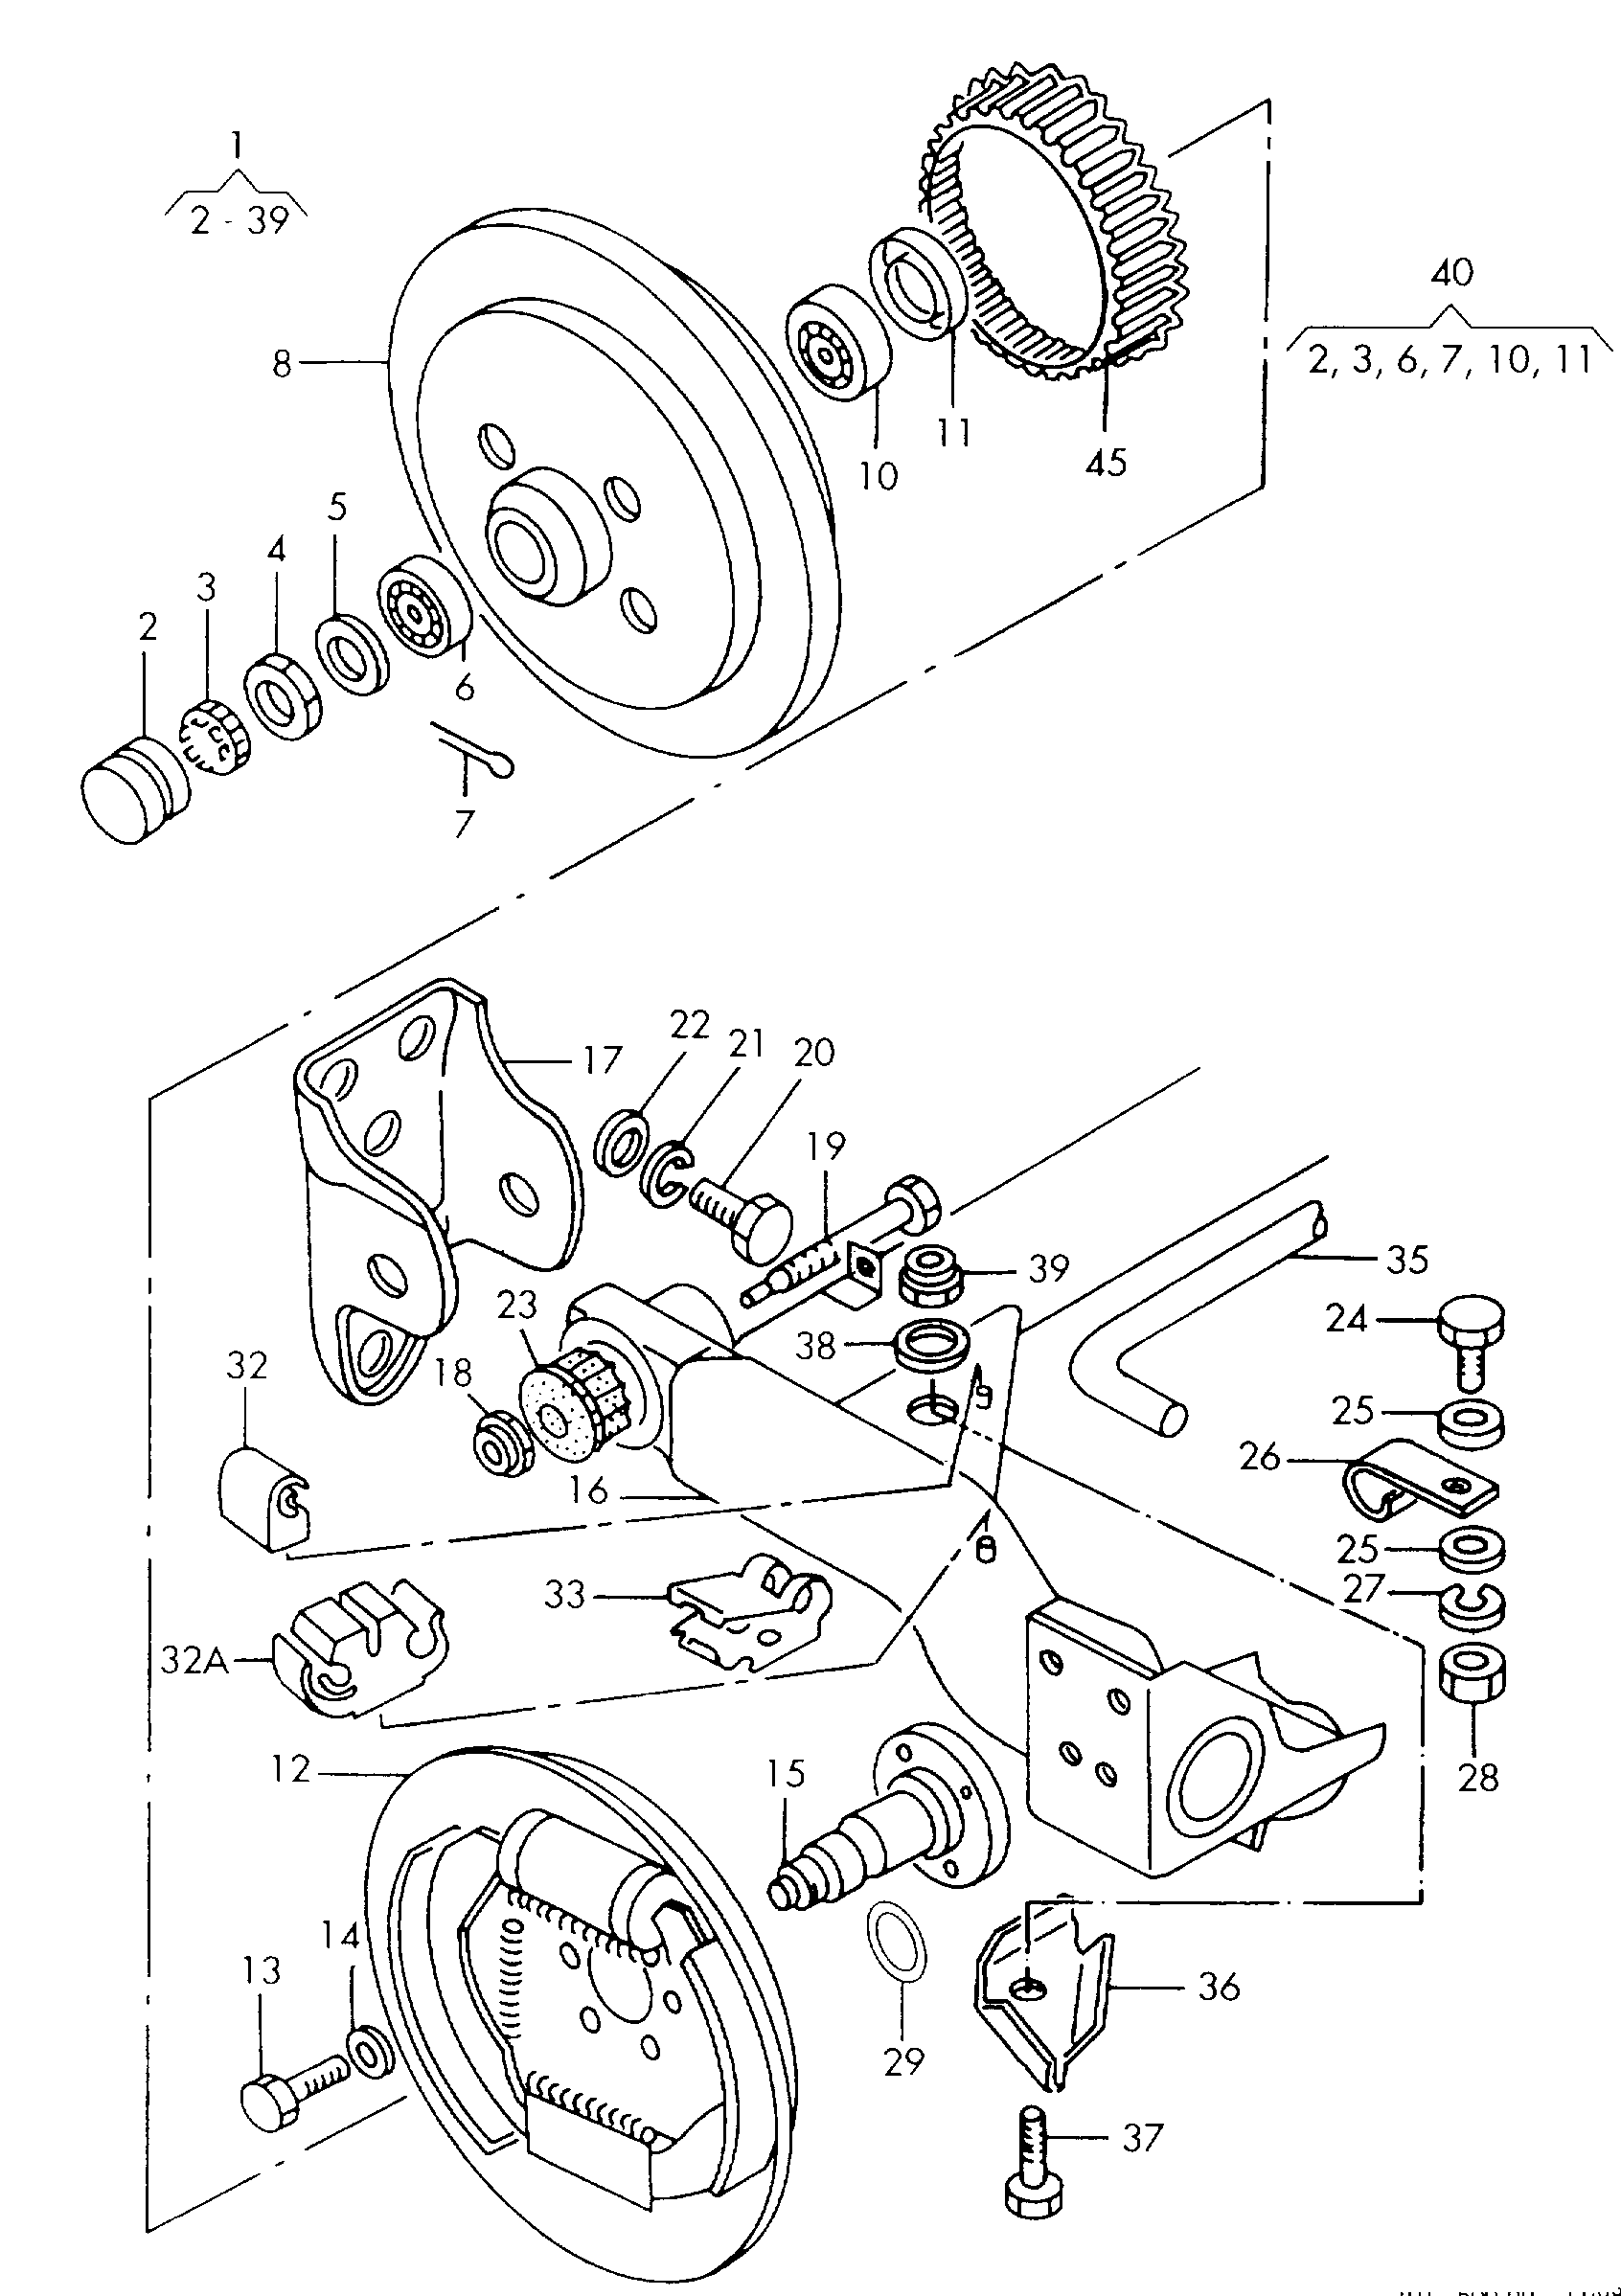 rear axle beam with attachment
parts - Felicia(FEL)  